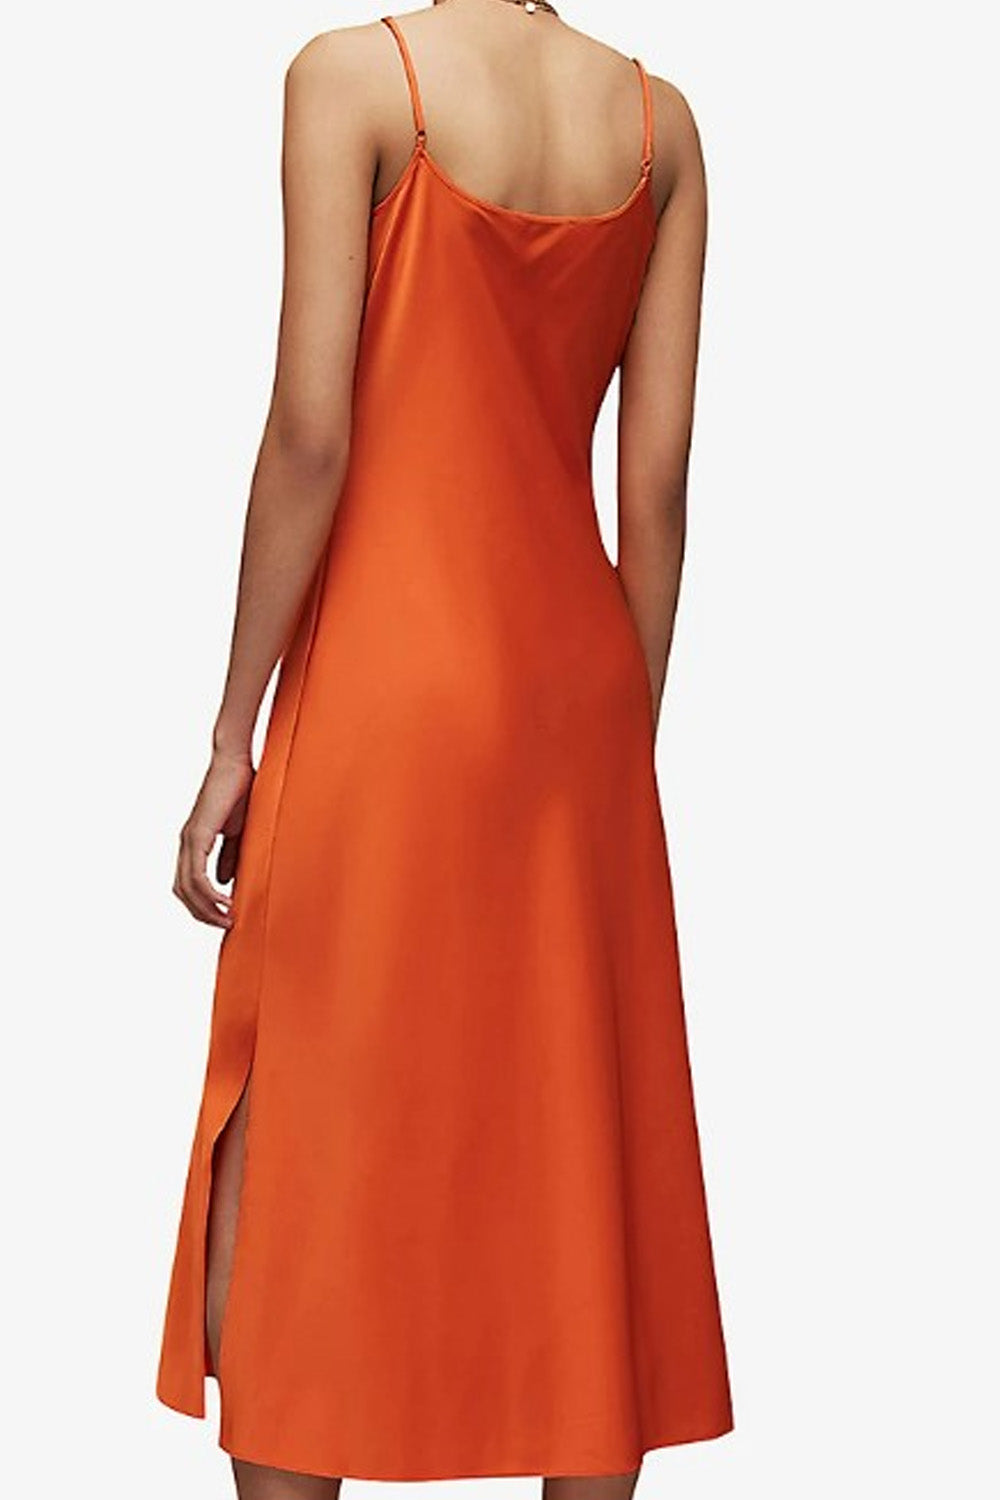 Halcyon Orange Dress